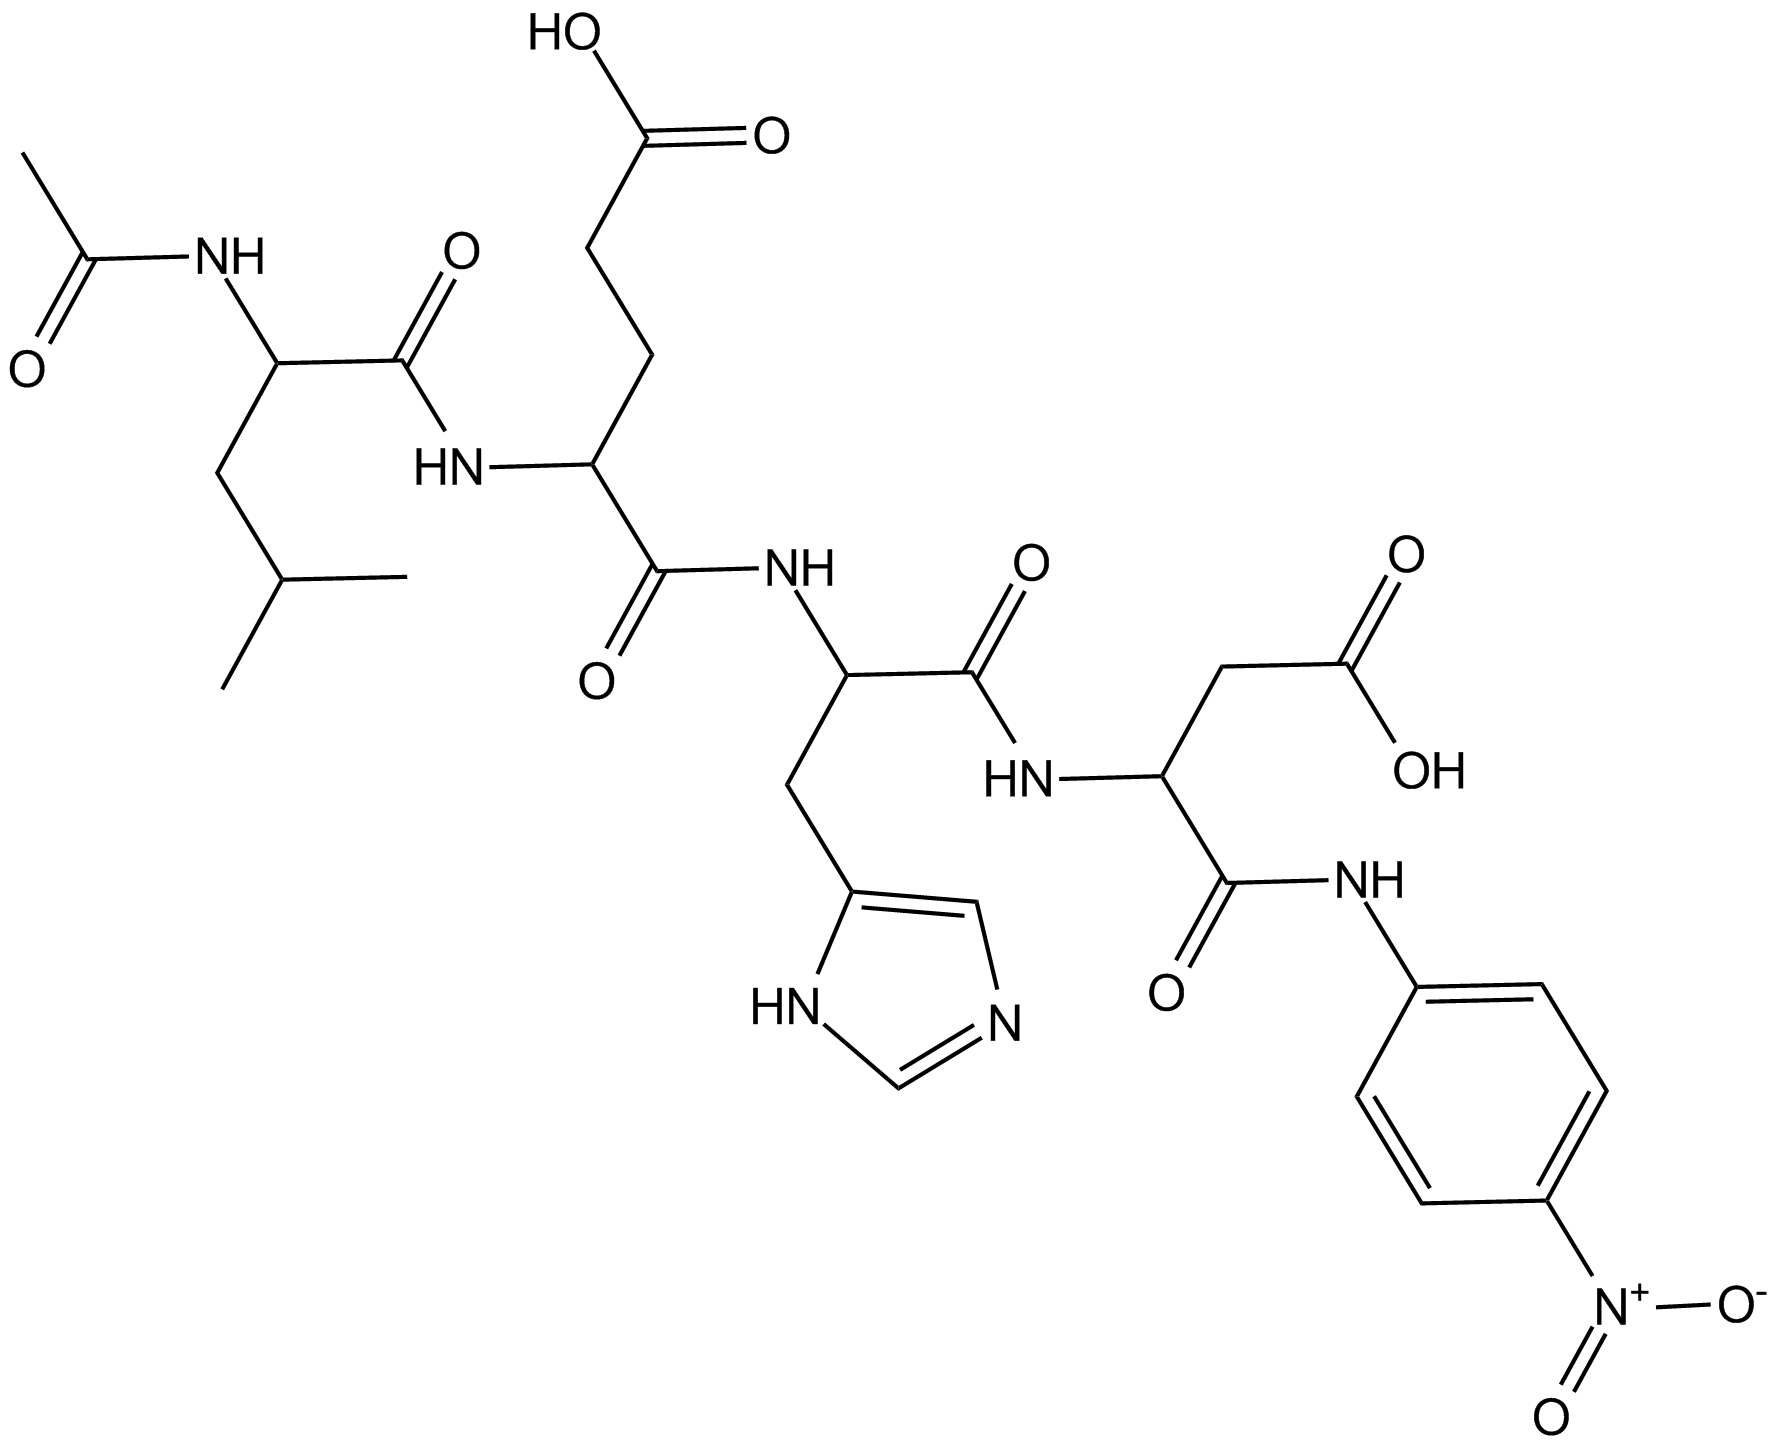 Ac-LEHD-pNA Chemical Structure